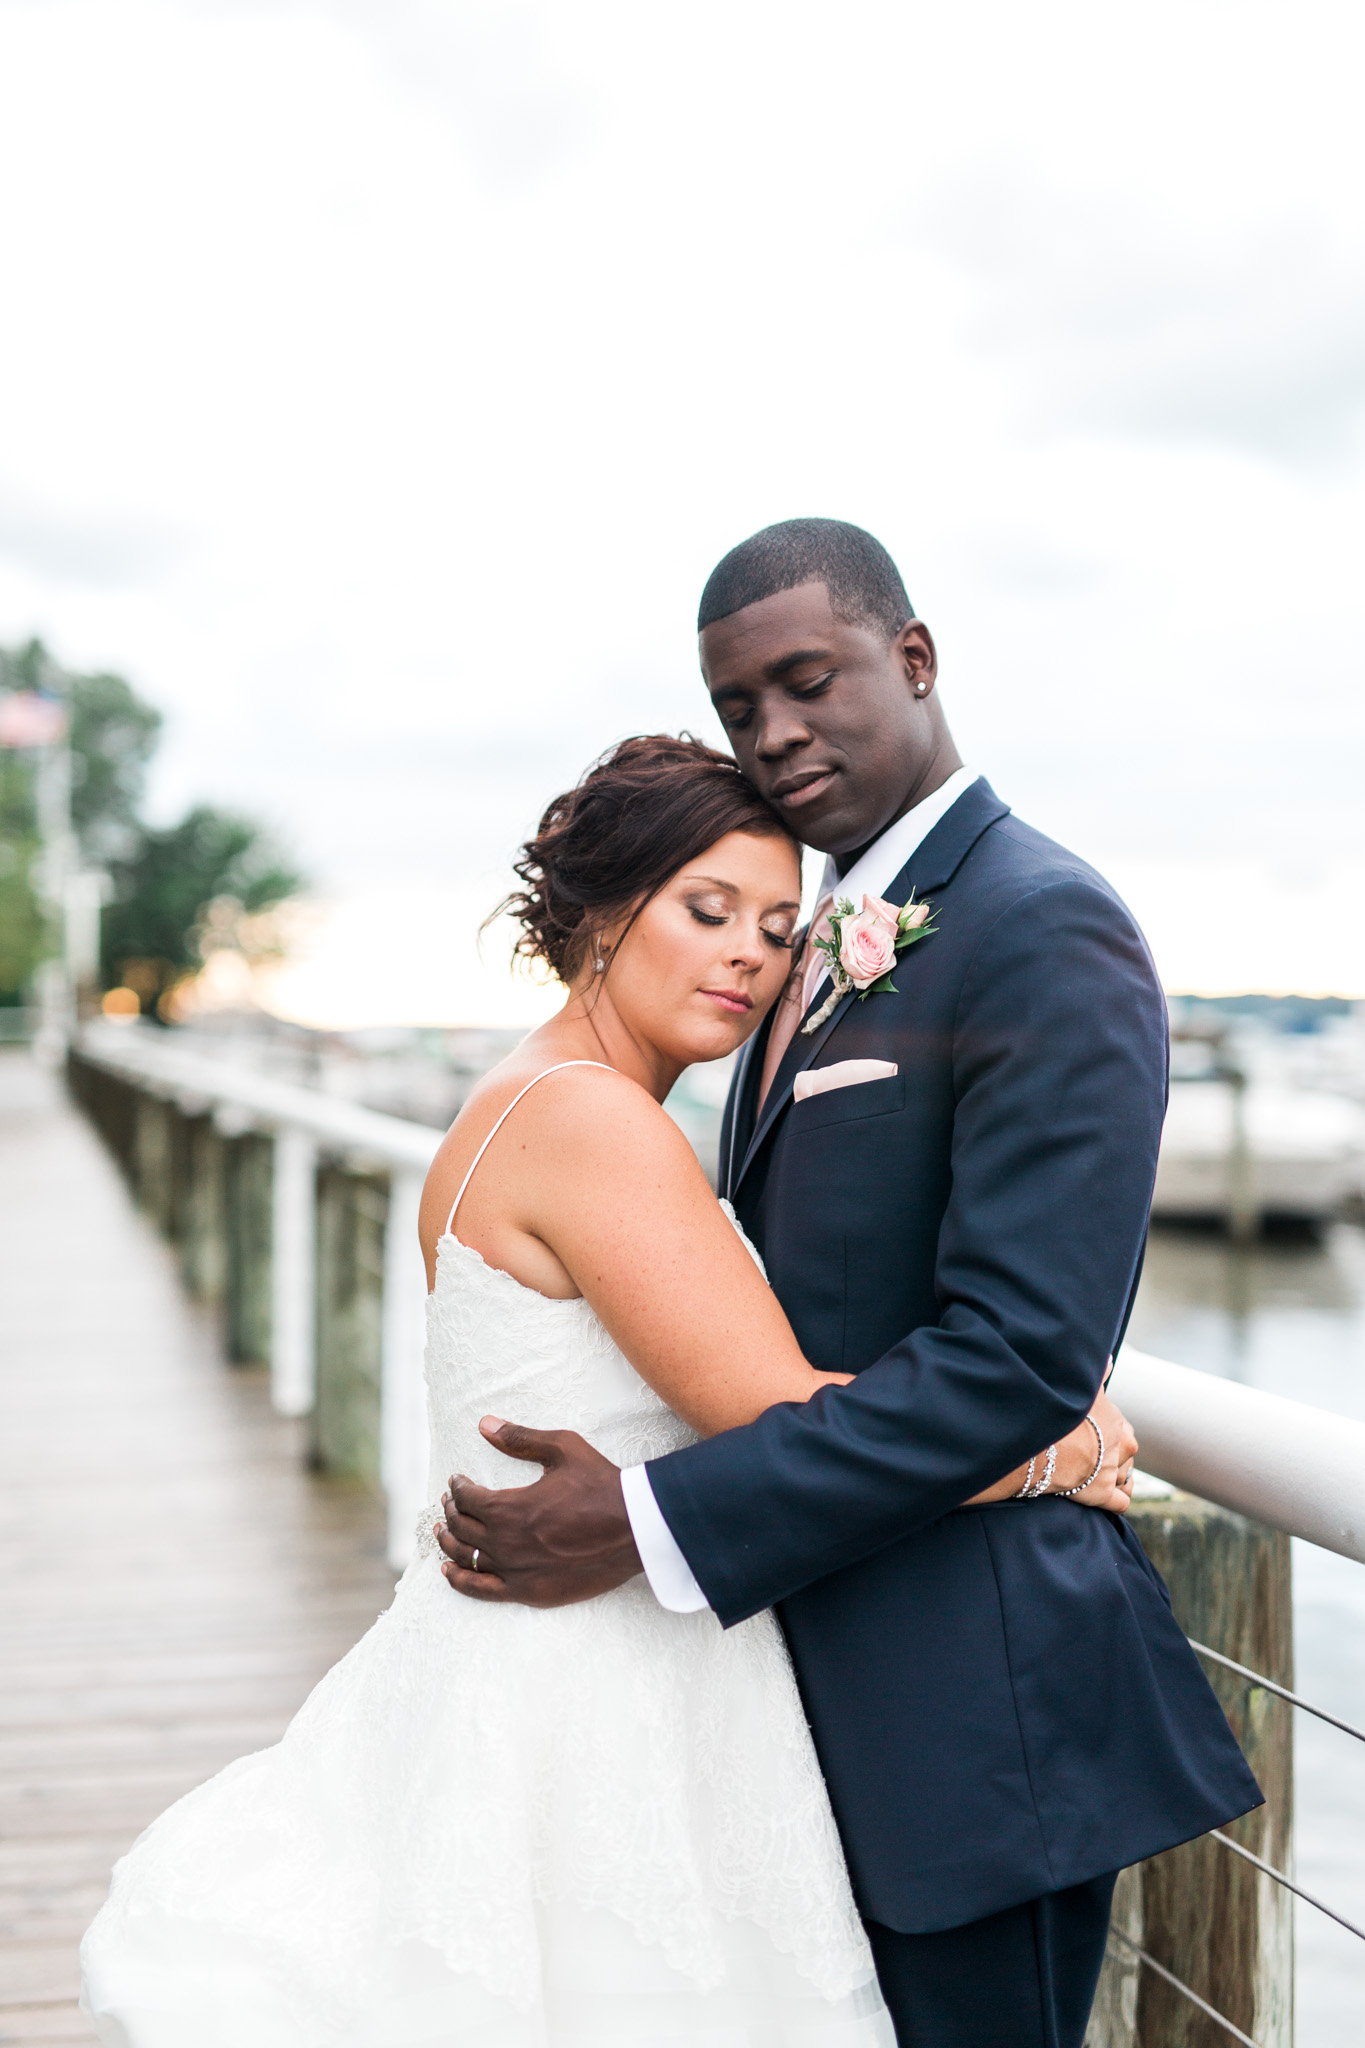 Nautical Dockside Michigan Wedding | West Michigan Wedding Photographer | Laurenda Marie Photography 